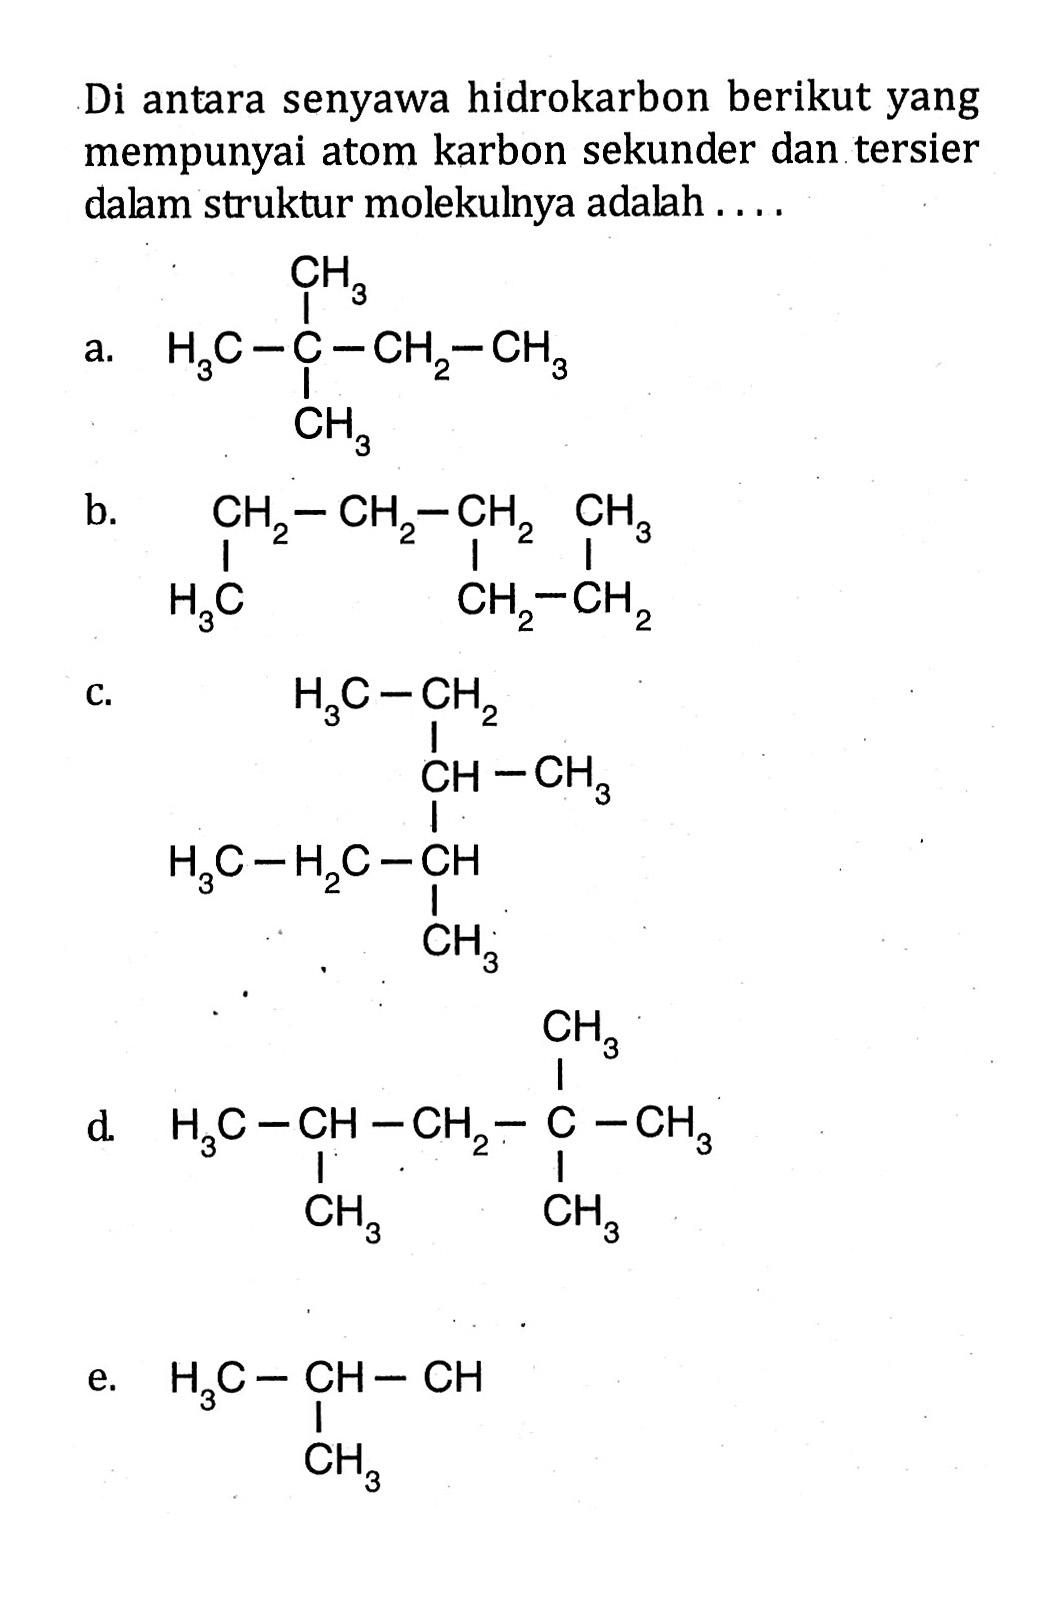 Di antara senyawa hidrokarbon berikut yang mempunyai atom karbon sekunder dan tersier dalam struktur molekulnya adalah CH3 a. H;c-C _ CH3 CH3 b- CHz CHz CH3 H3C CH2 C. H3C - CHz CH _ CH3 H3C~HzC ~CH CH3 CH3 d H3C _CH 5 C 5 CH3 CH: CH3 e. H3C = CH = CH CH3 CH2 CH2 CHz CH2 "